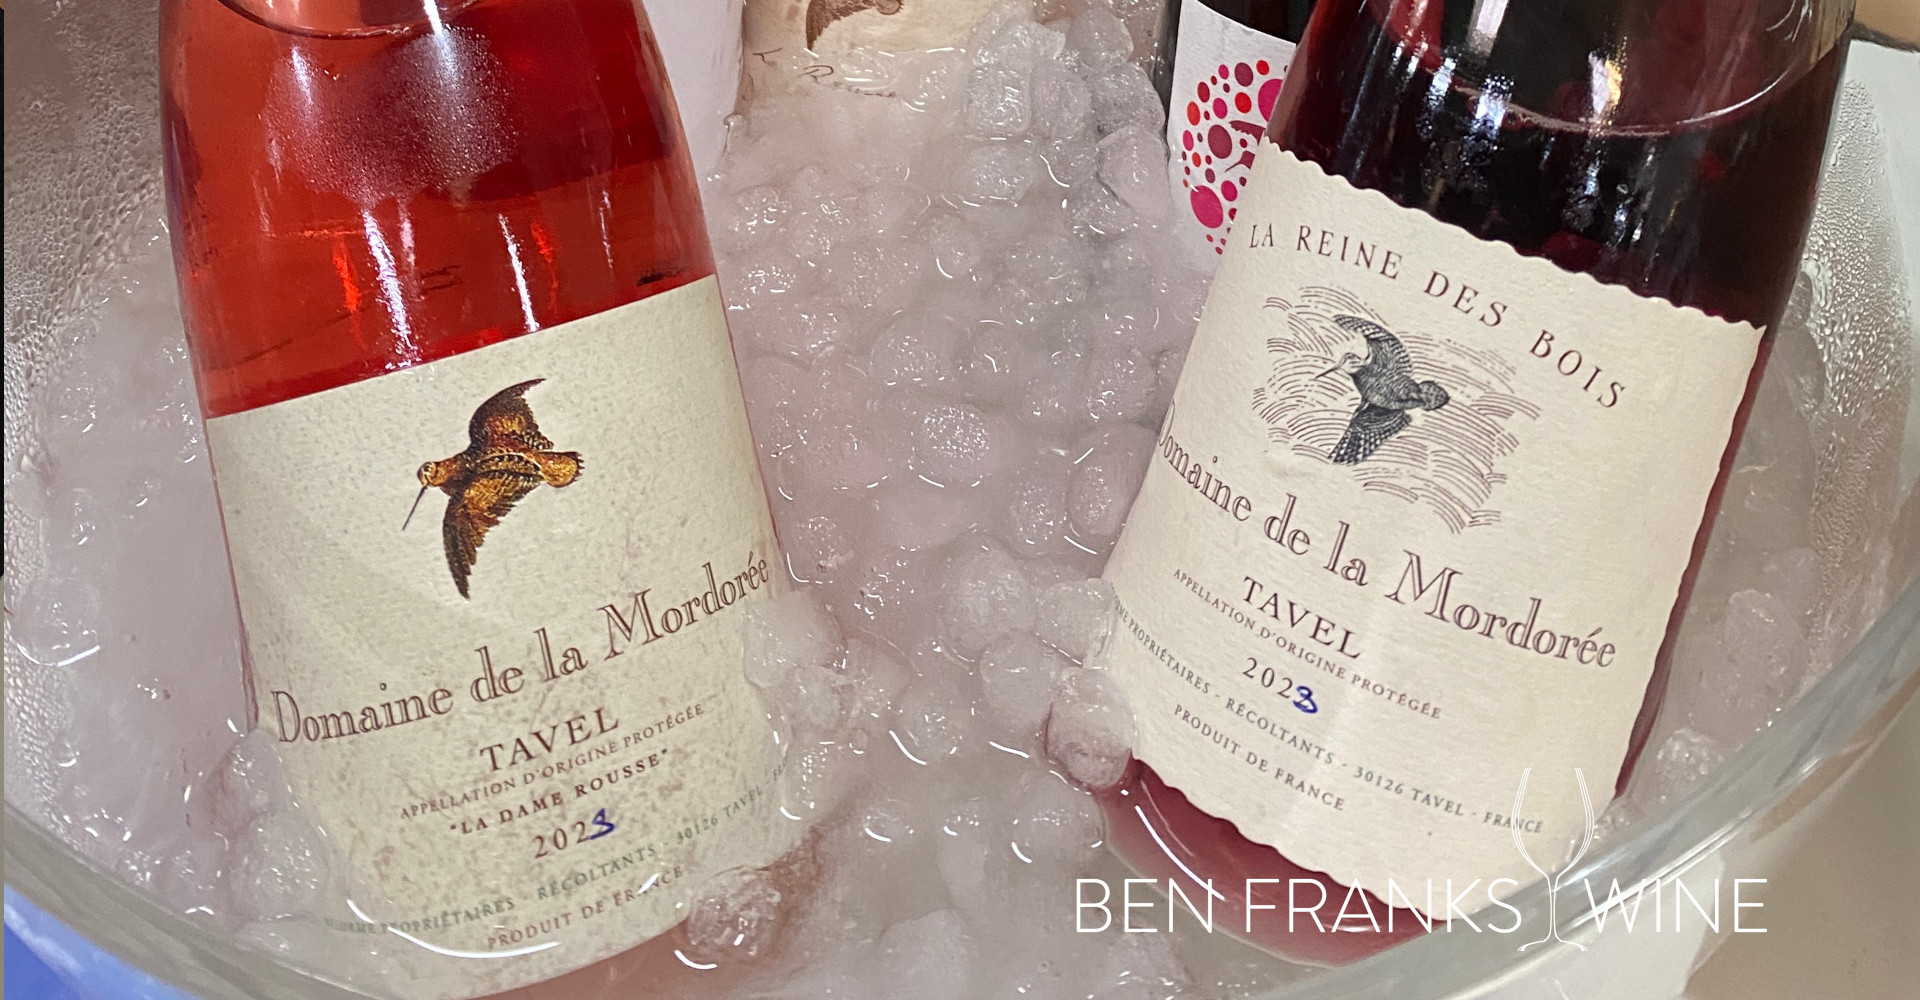 Domaine de la Mordoree Tavel Rose wines in ice